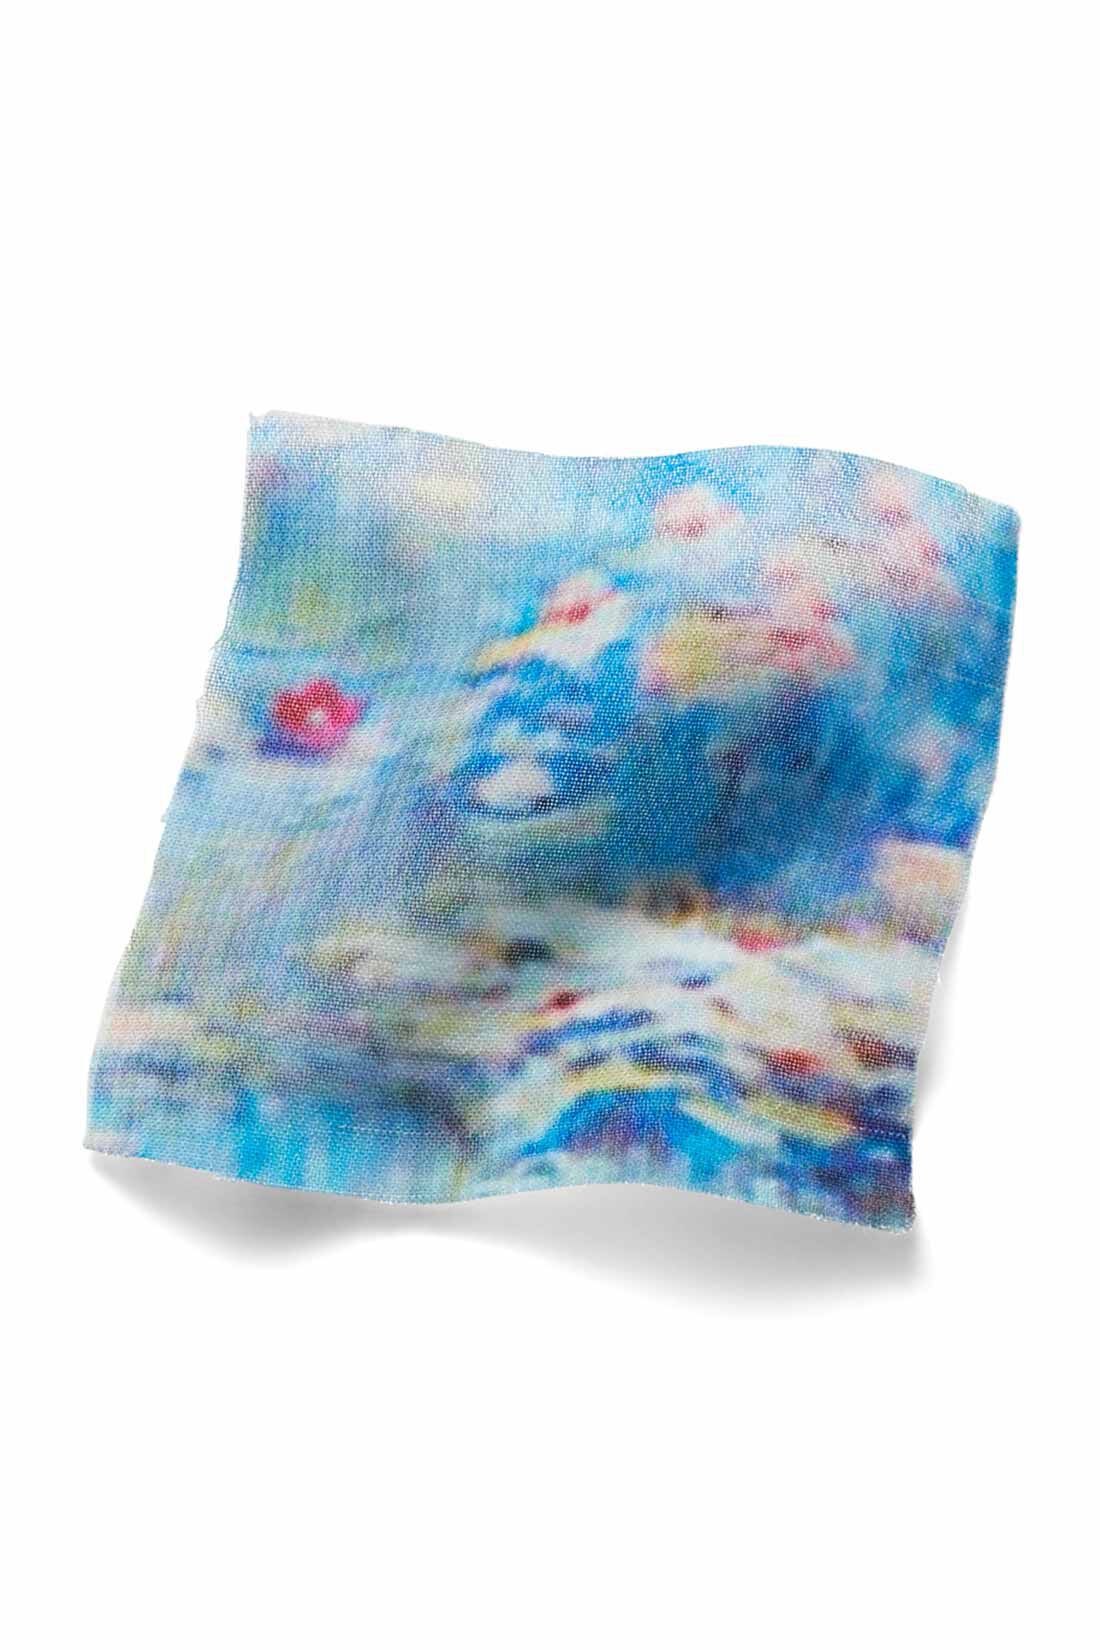 IEDIT|IEDIT[イディット]　モネの睡蓮をまとうシフォンスカート〈グリーン〉|原画をもとにパターンを起こし、水面を思わせる、透け感のあるシフォン素材にプリント。